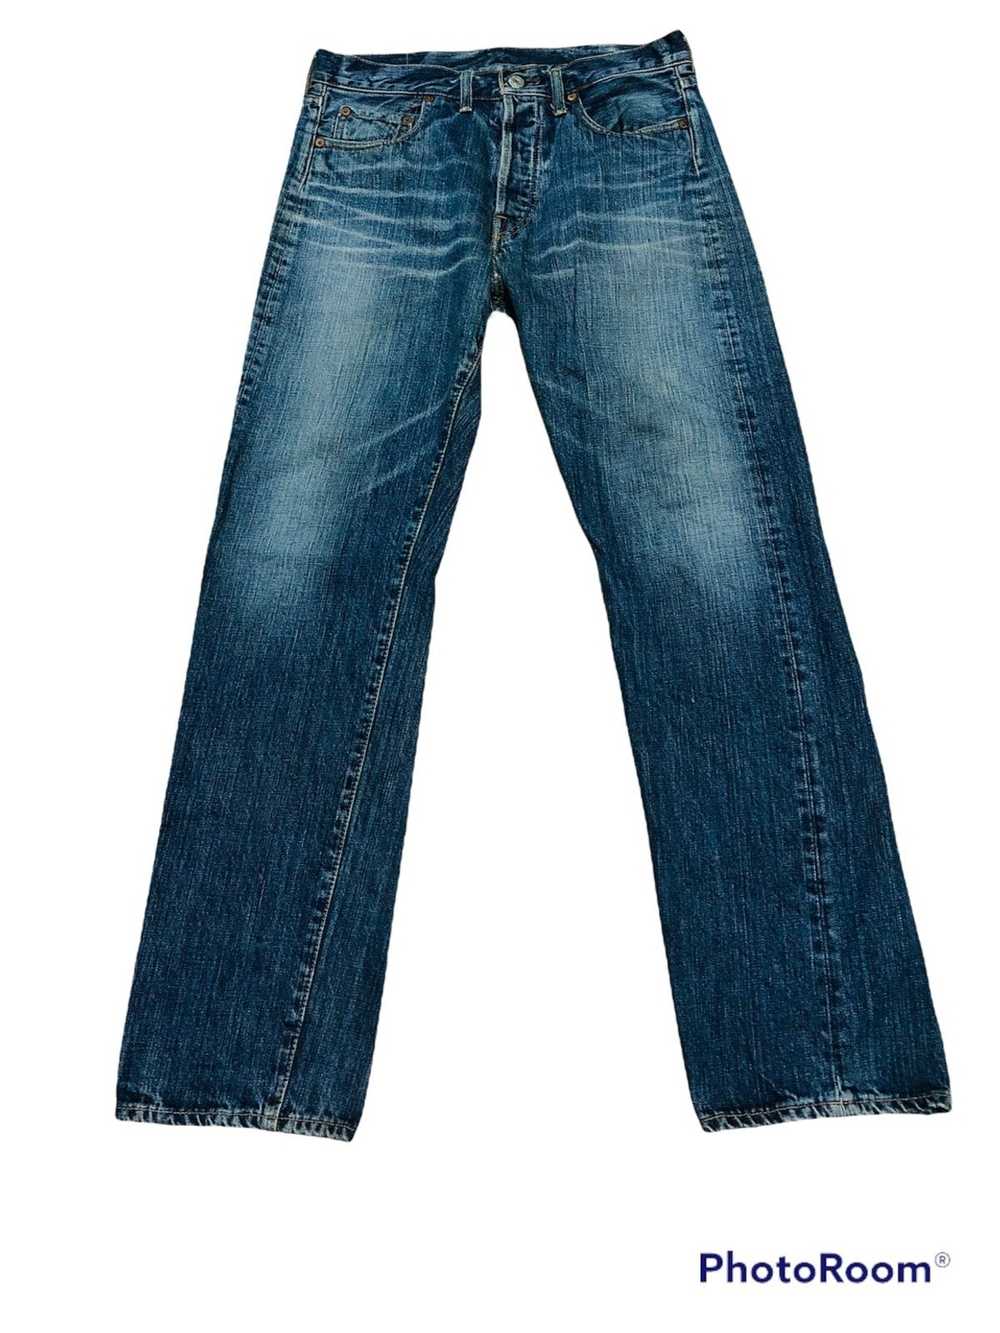 Denime Vintage Denime Jeans Non Selvedge - image 1